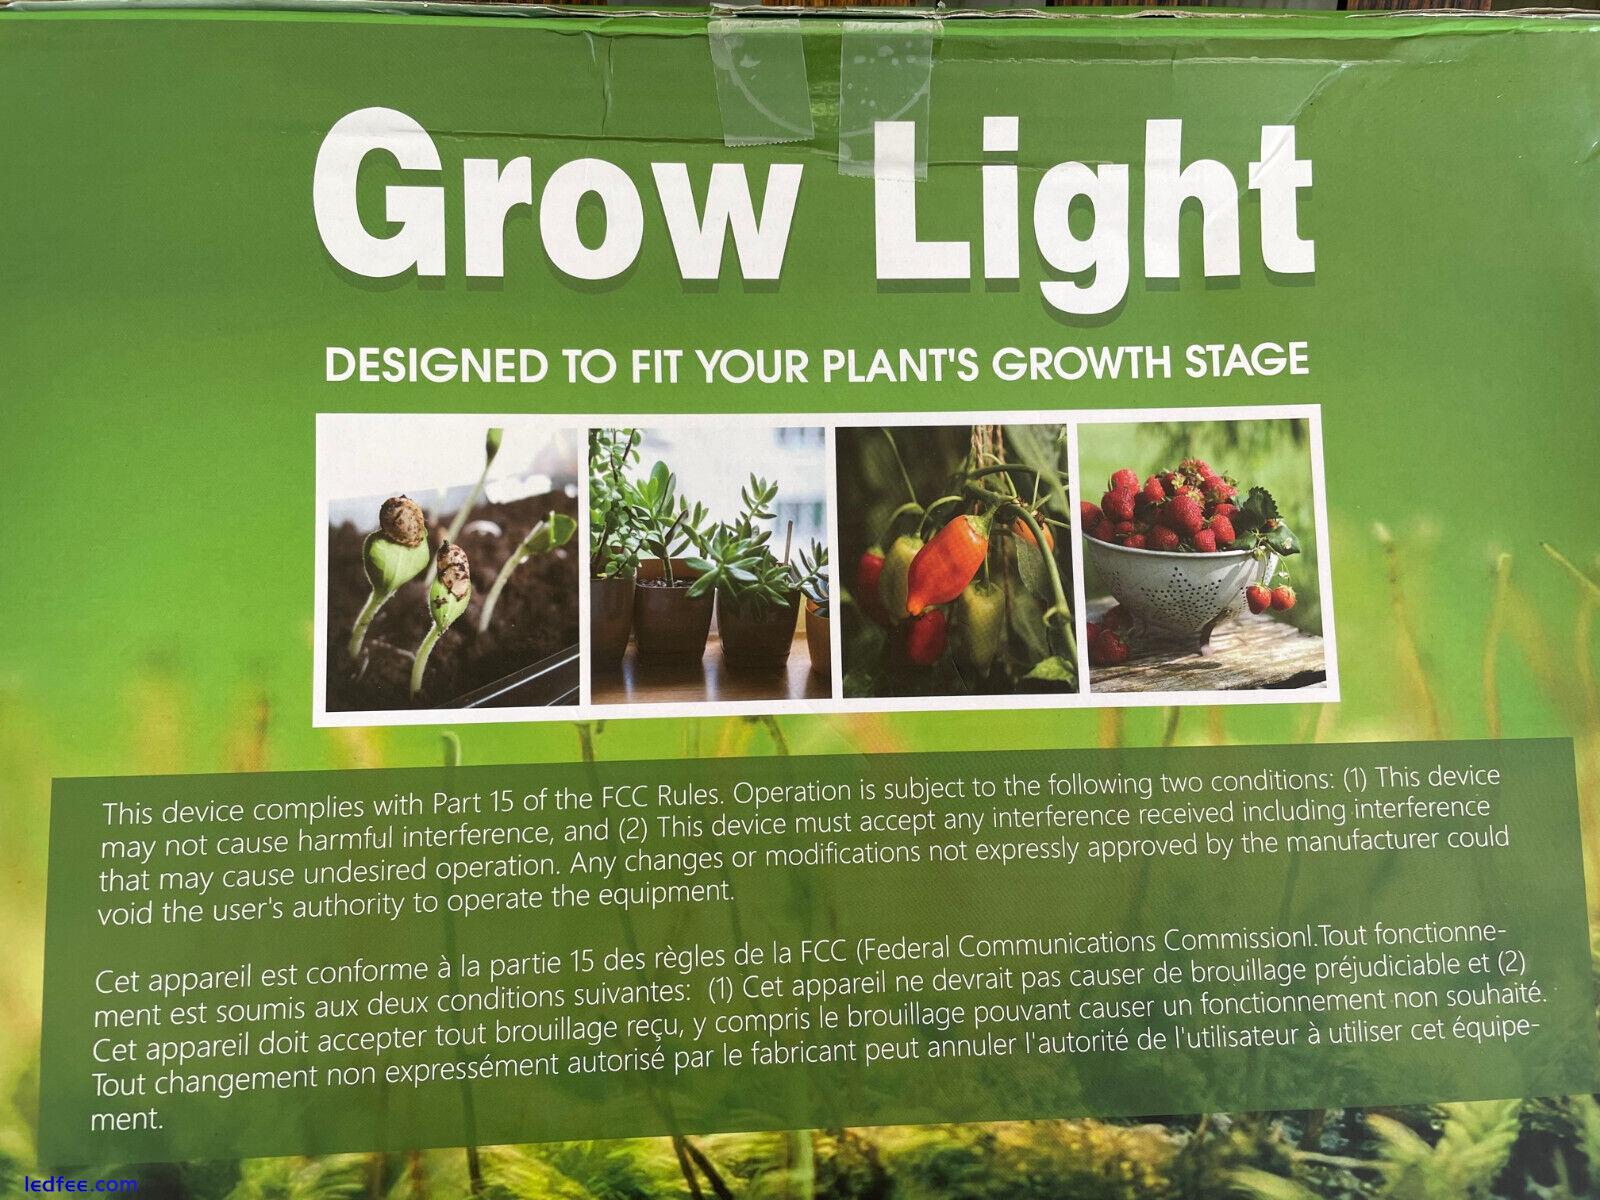 Grow Light, Briignite LED Grow Lights, 150W Full Spectrum LED Grow Light 3 